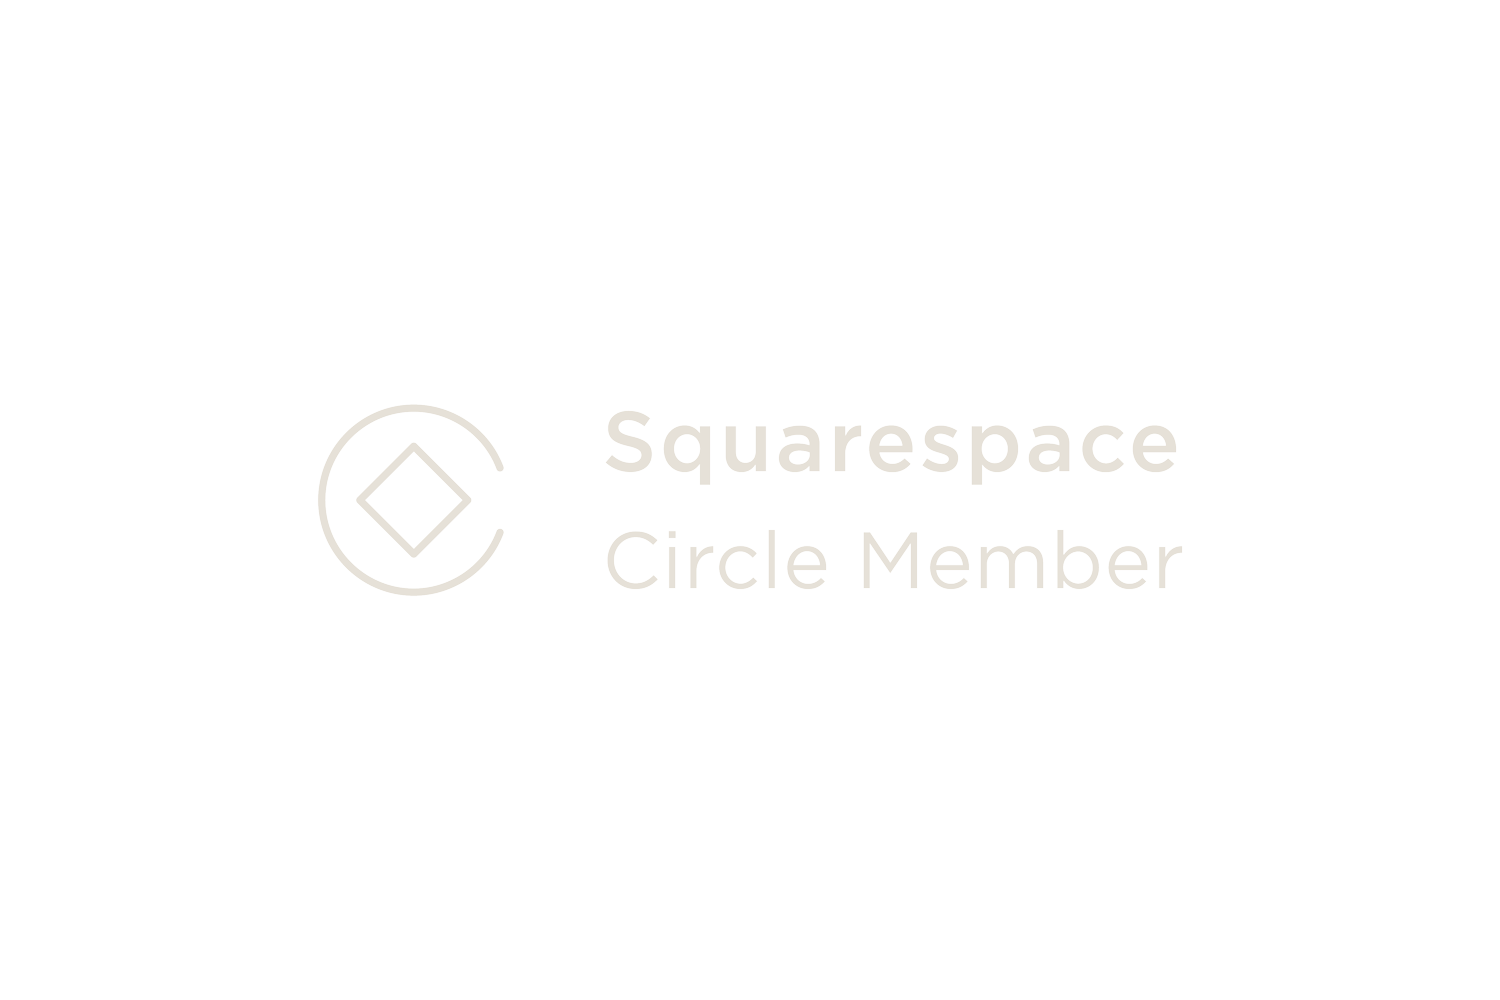 Squarespace圆圈成员标志